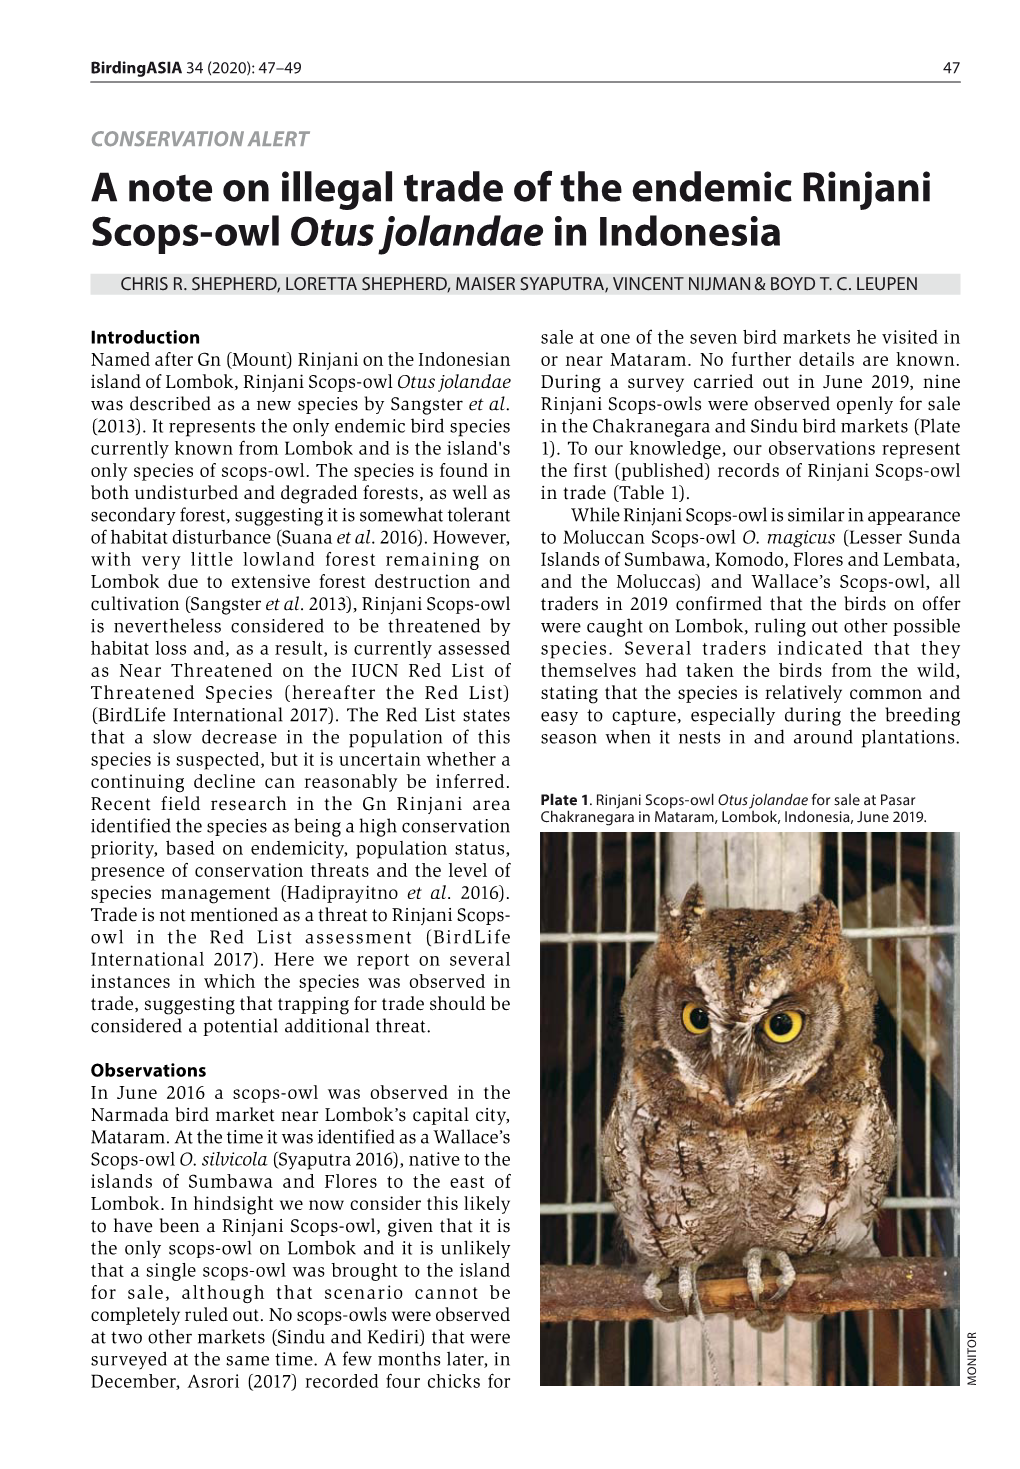 A Note on Illegal Trade of the Endemic Rinjani Scops-Owl Otus Jolandae in Indonesia